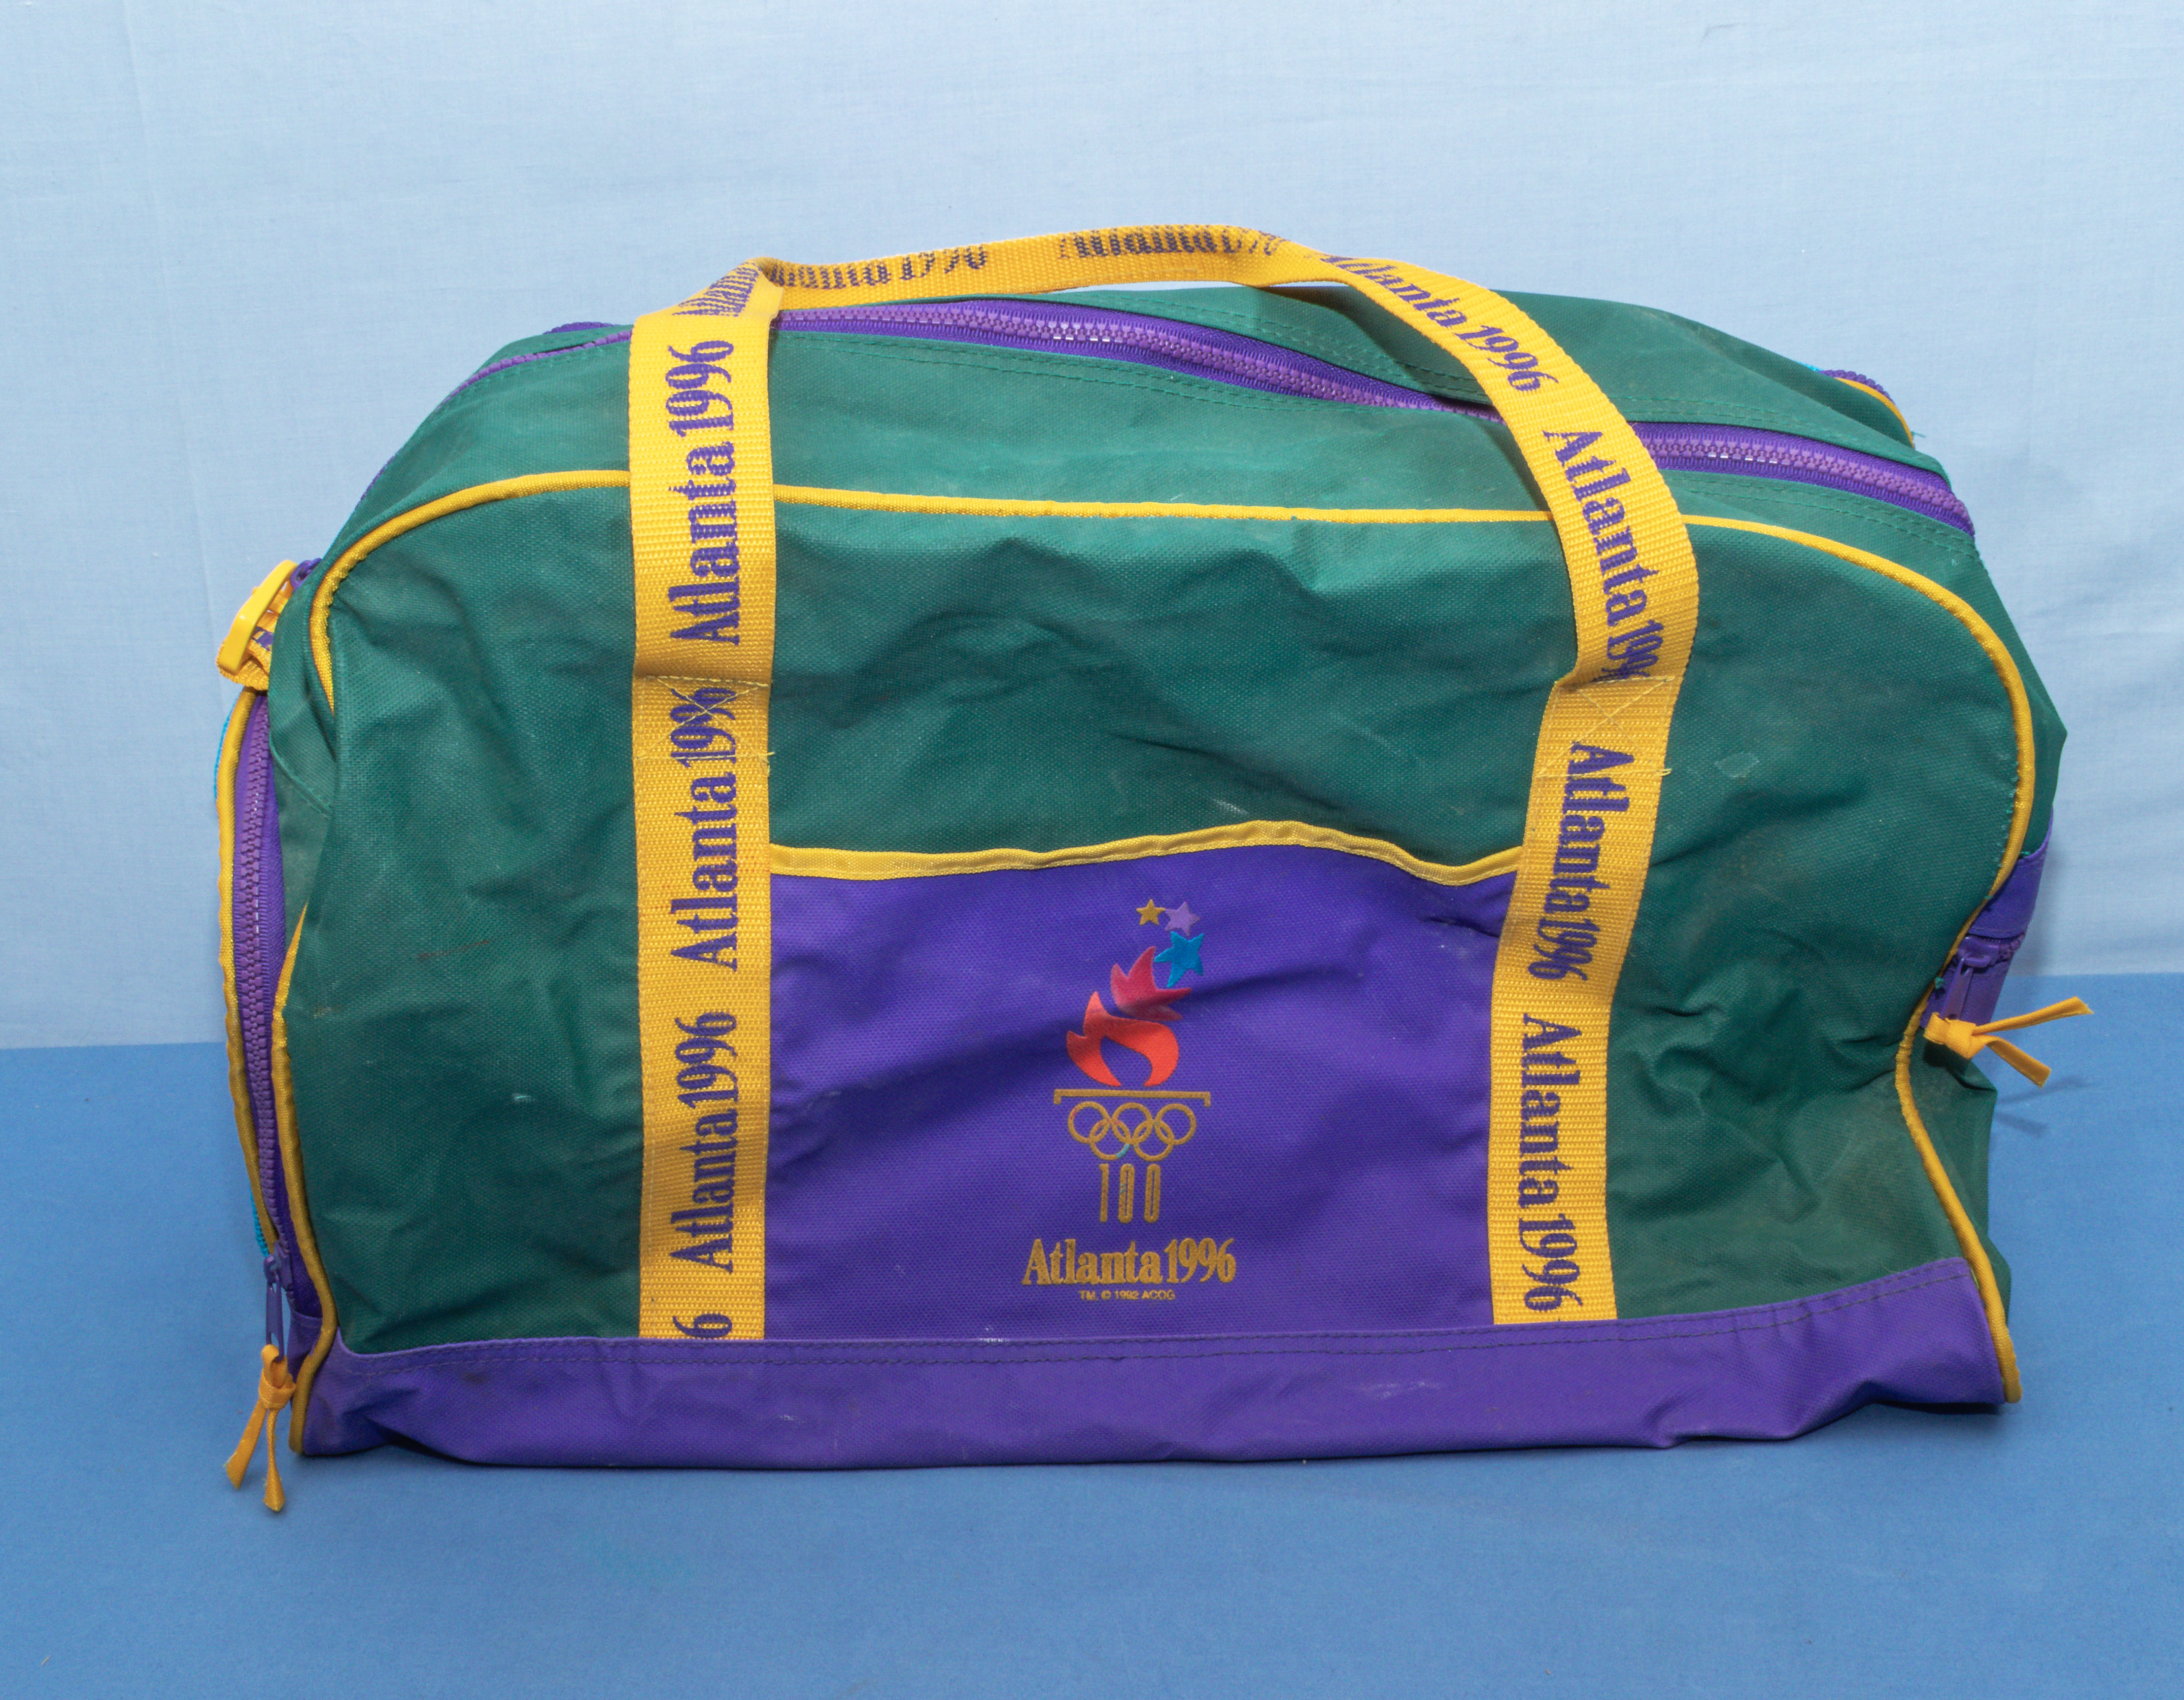 Atlanta 1996 Olympic Games official merchandise bag